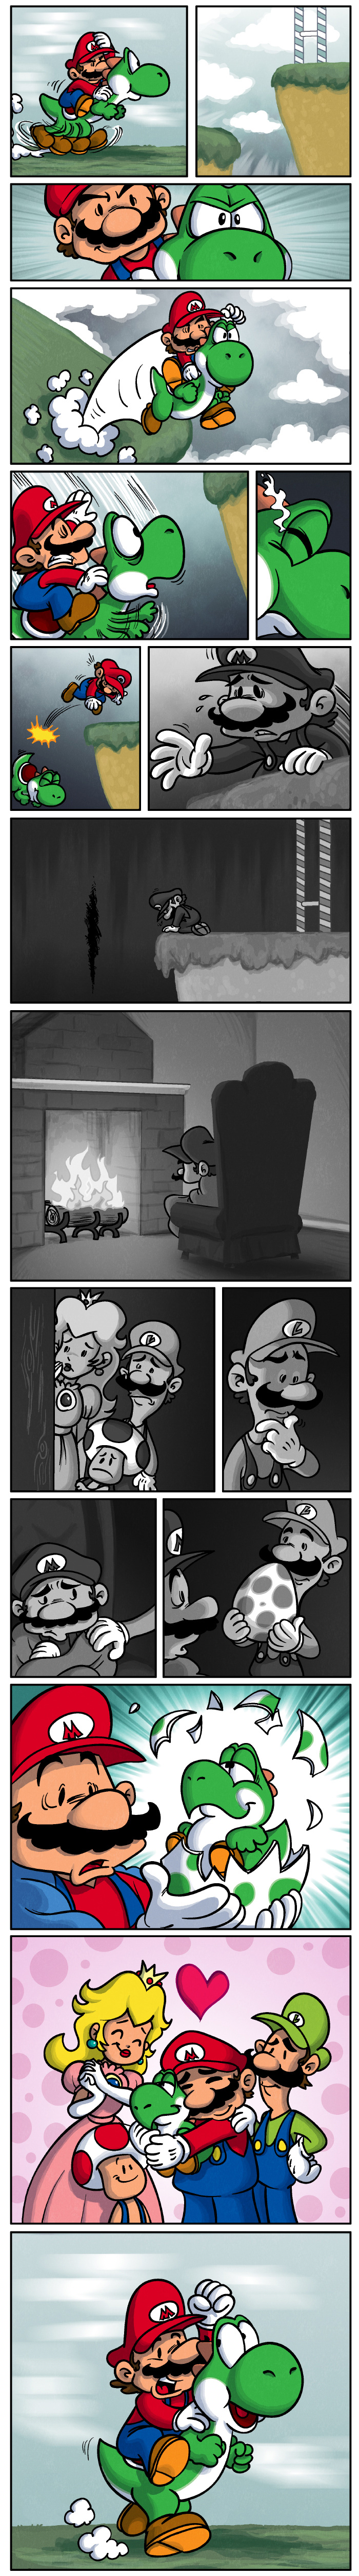 Dark Nintendo Comic: How Mario Deals with Yoshi